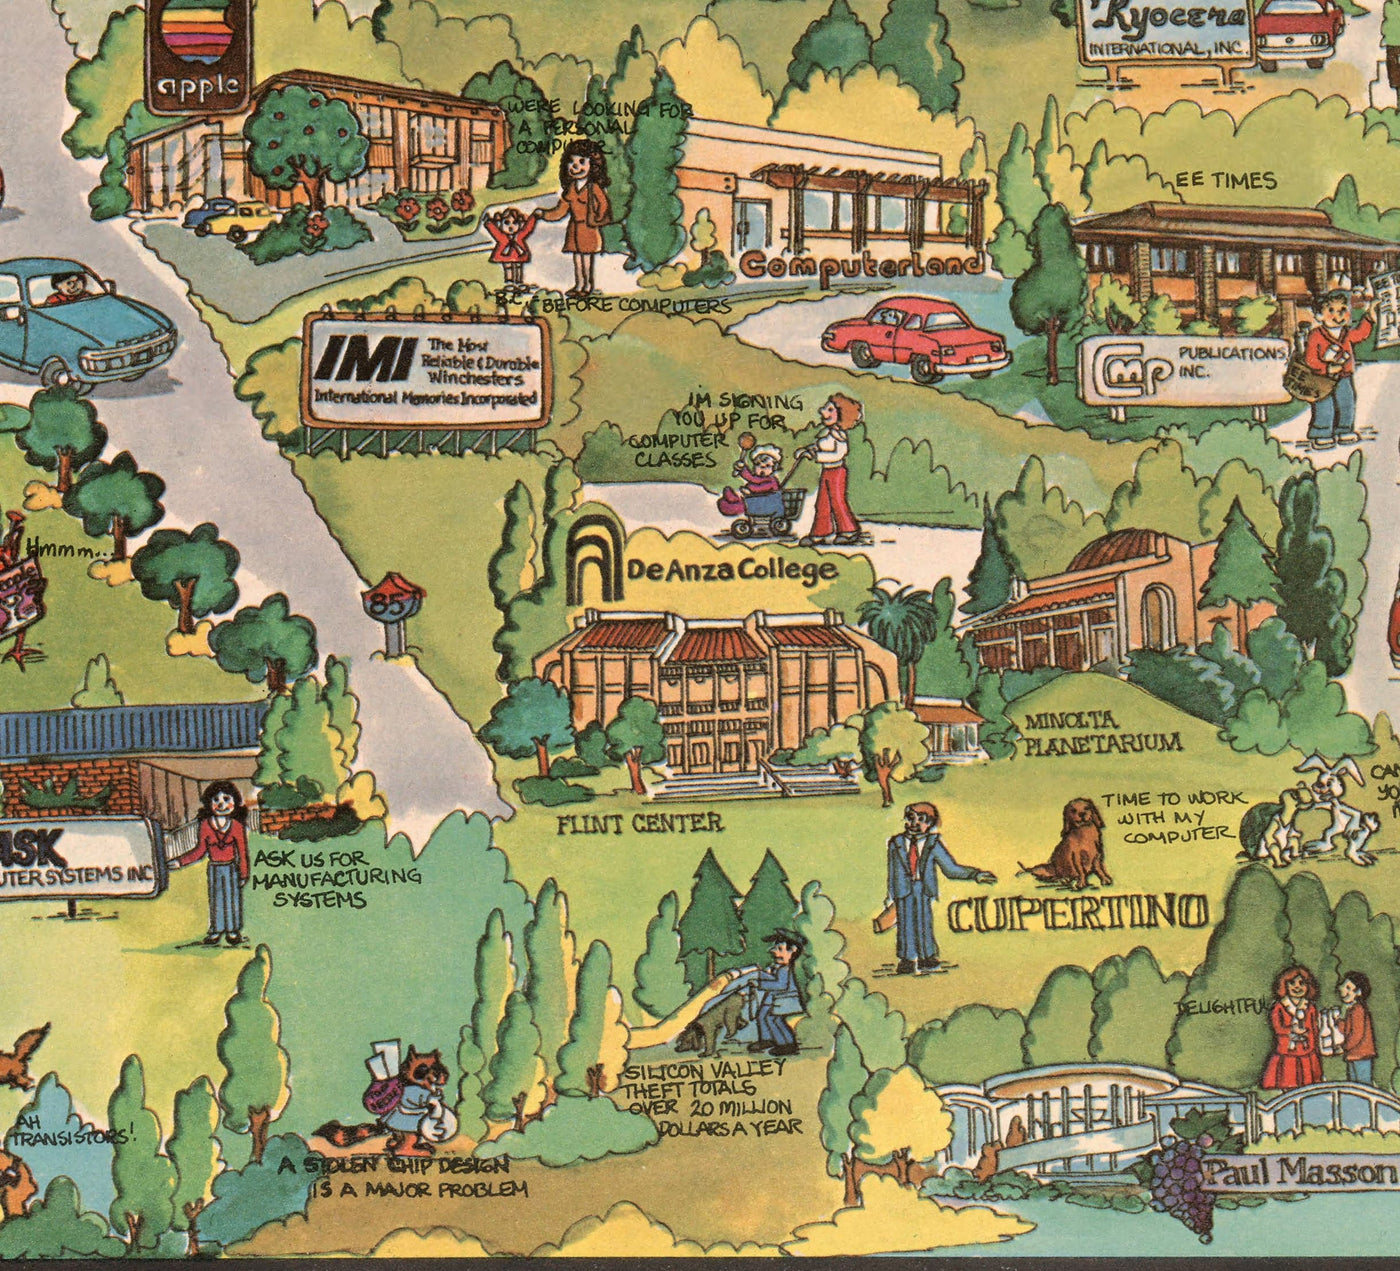 Ancienne Carte de Silicon Valley, 1982 - Pictorial Tableau de MountainView, Sunnyvale, Cupertino, San Jose, Fremont